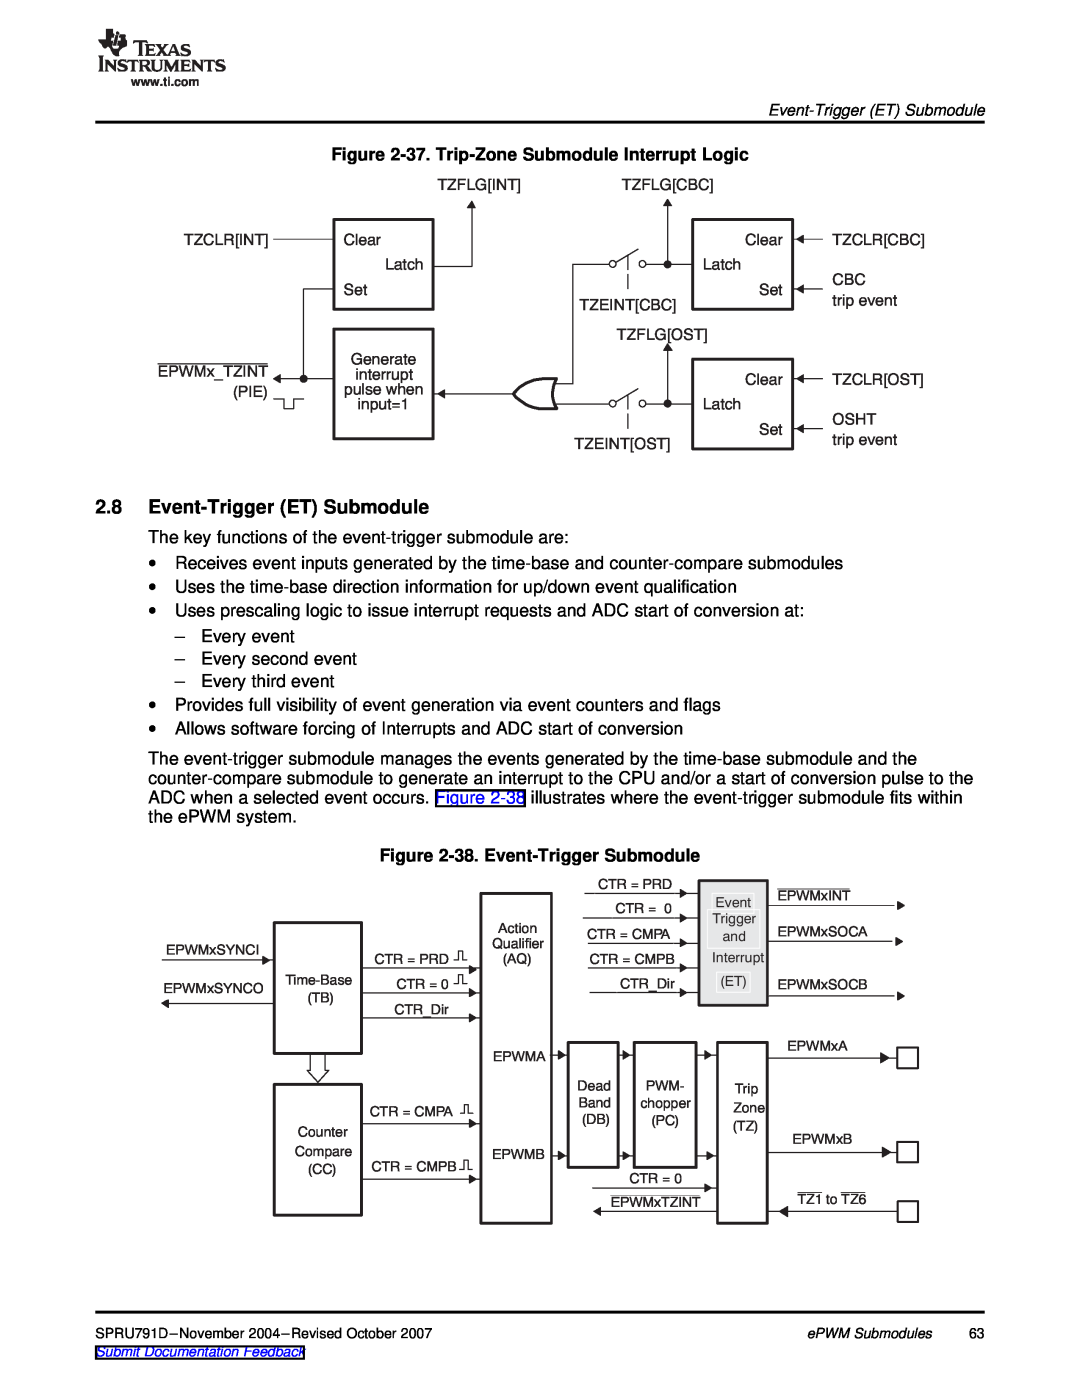 Texas Instruments 28xxx Event-Trigger ET Submodule, 37. Trip-Zone Submodule Interrupt Logic, 38. Event-Trigger Submodule 